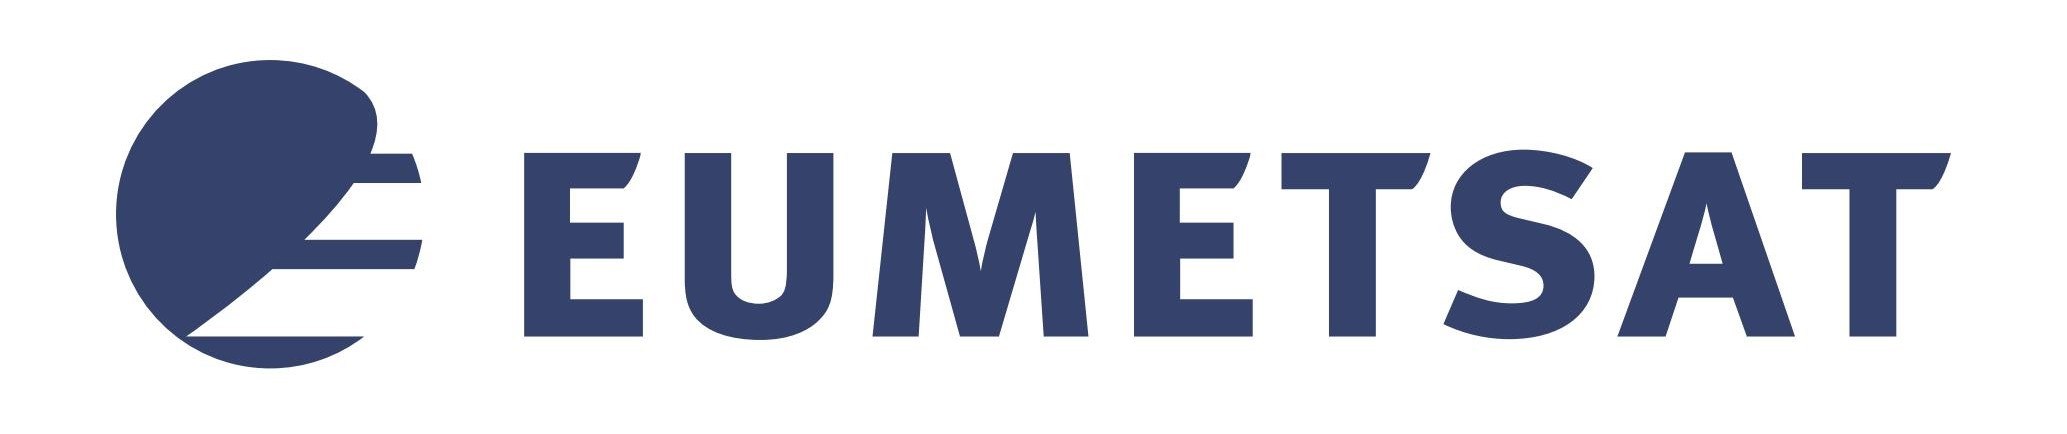 EUMETSAT Logo png